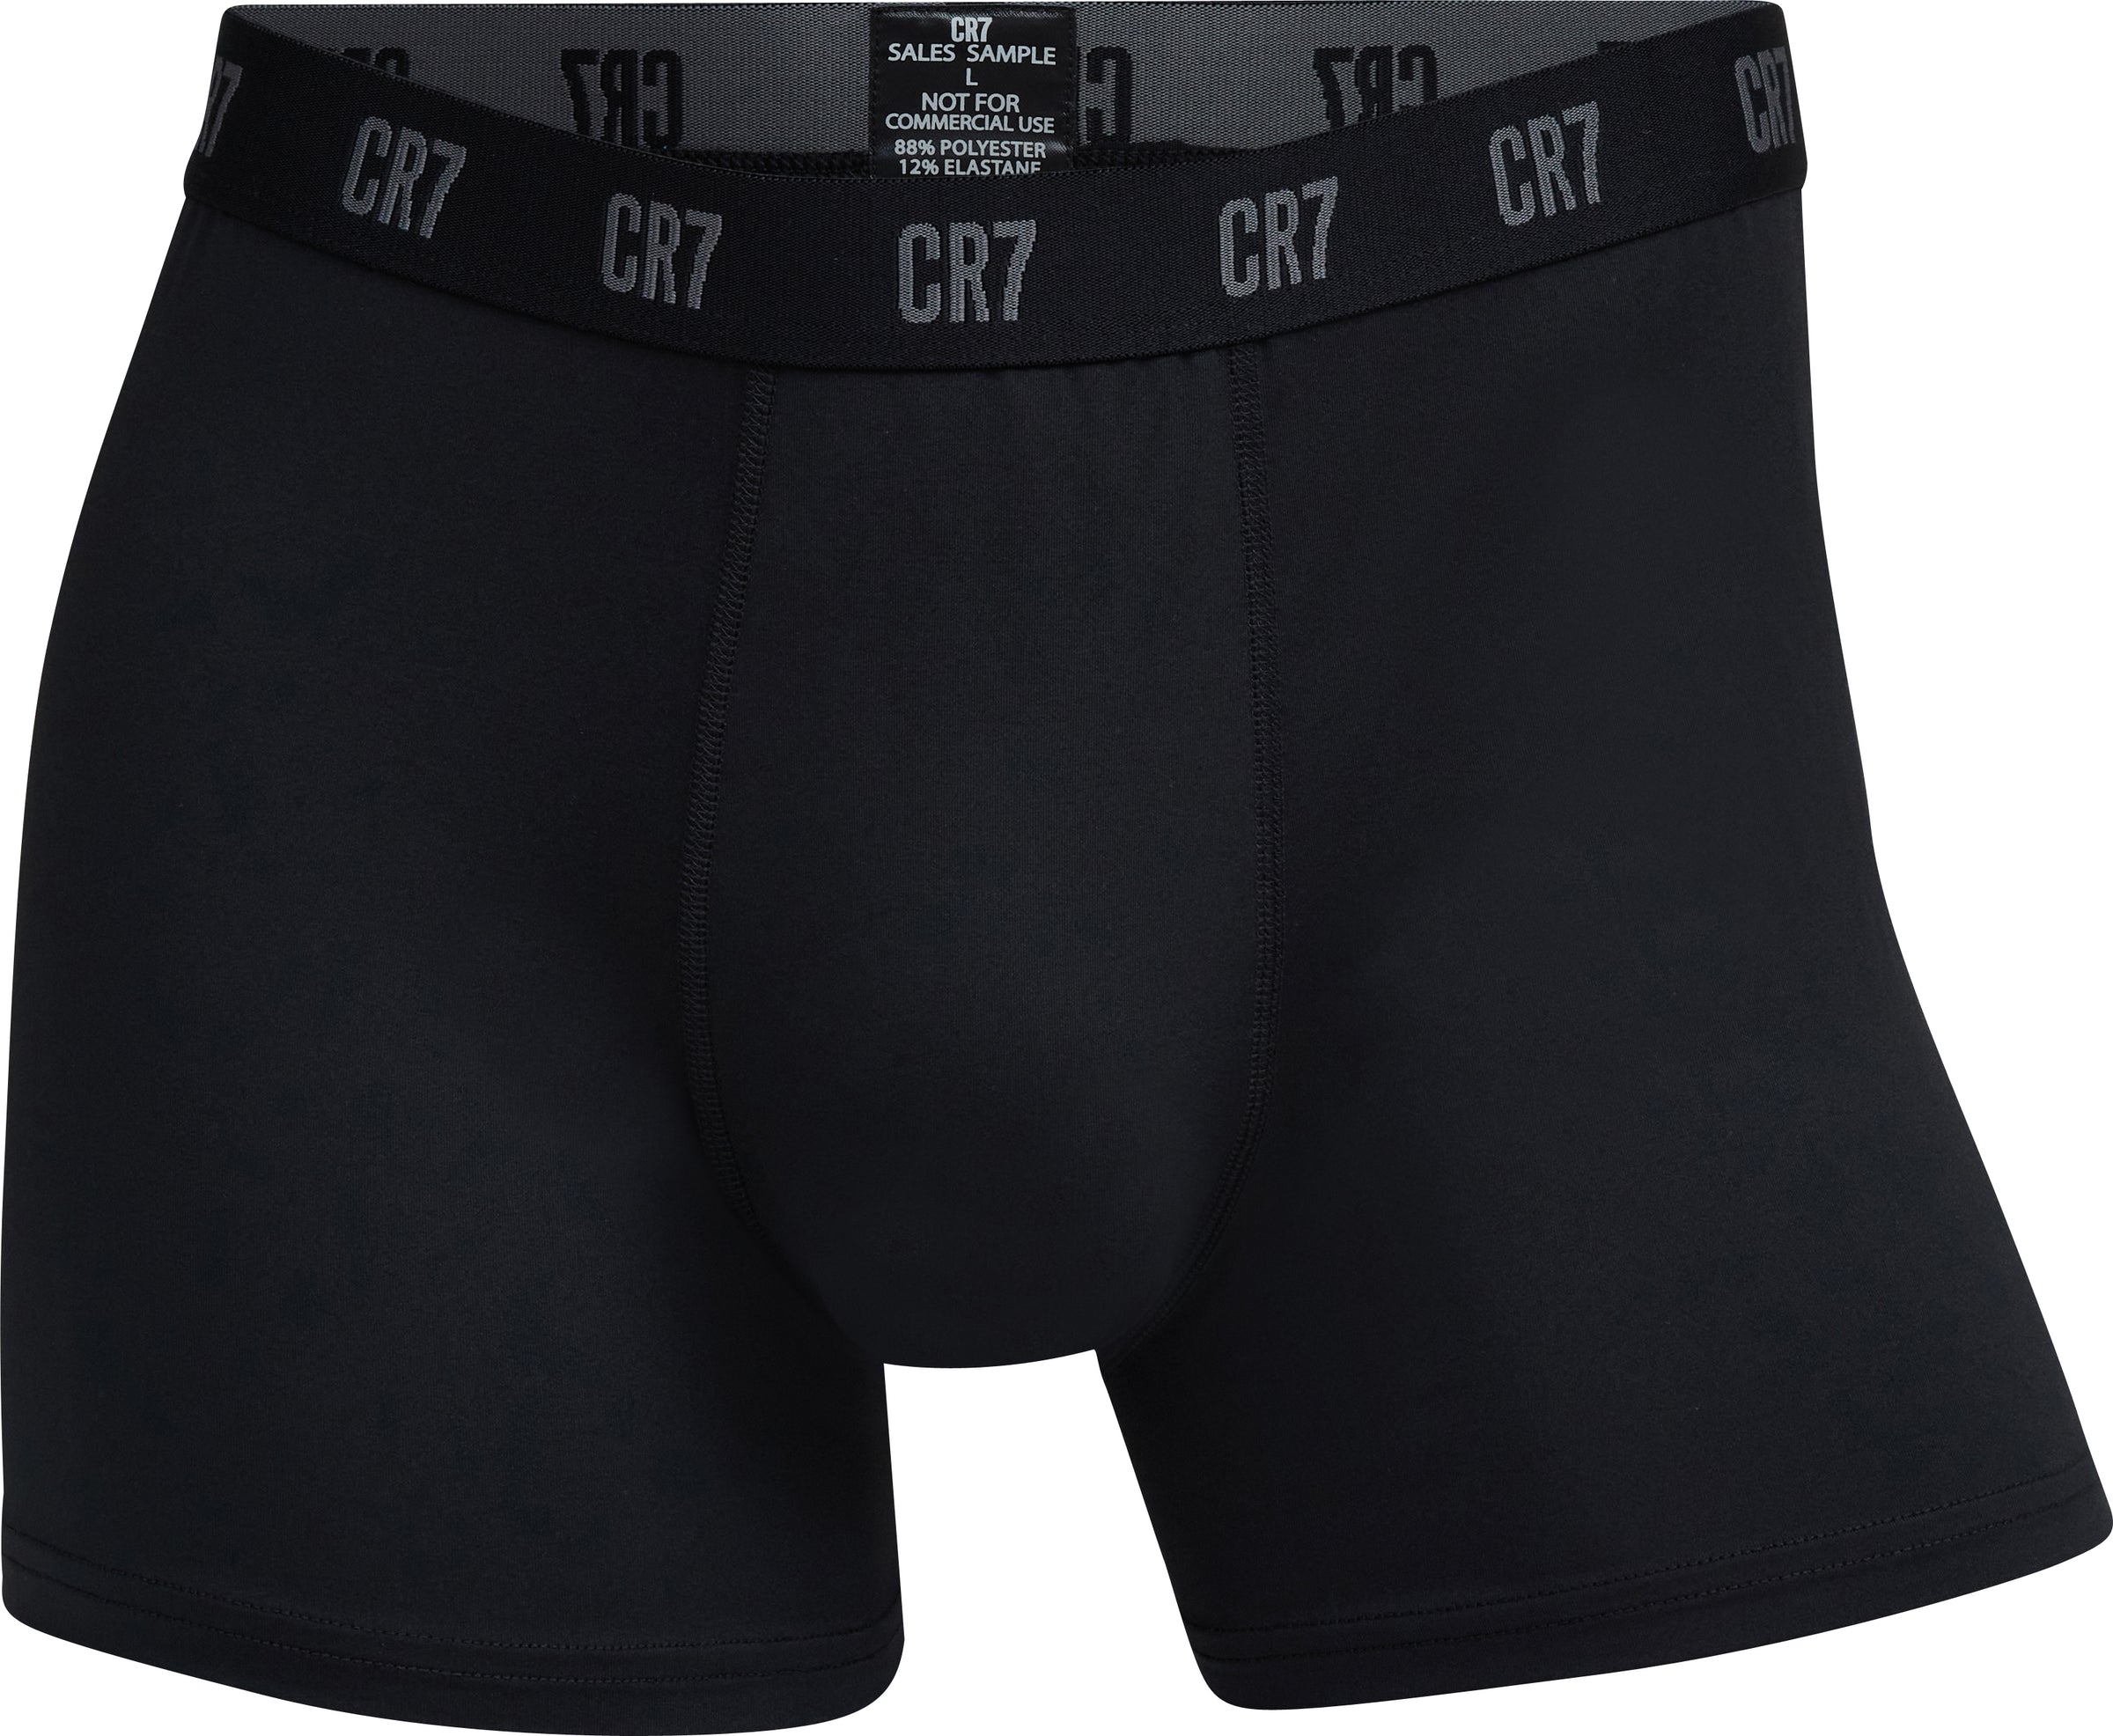 CR7 Men's 3-Pack Cotton Briefs - Black/Grey/White - S